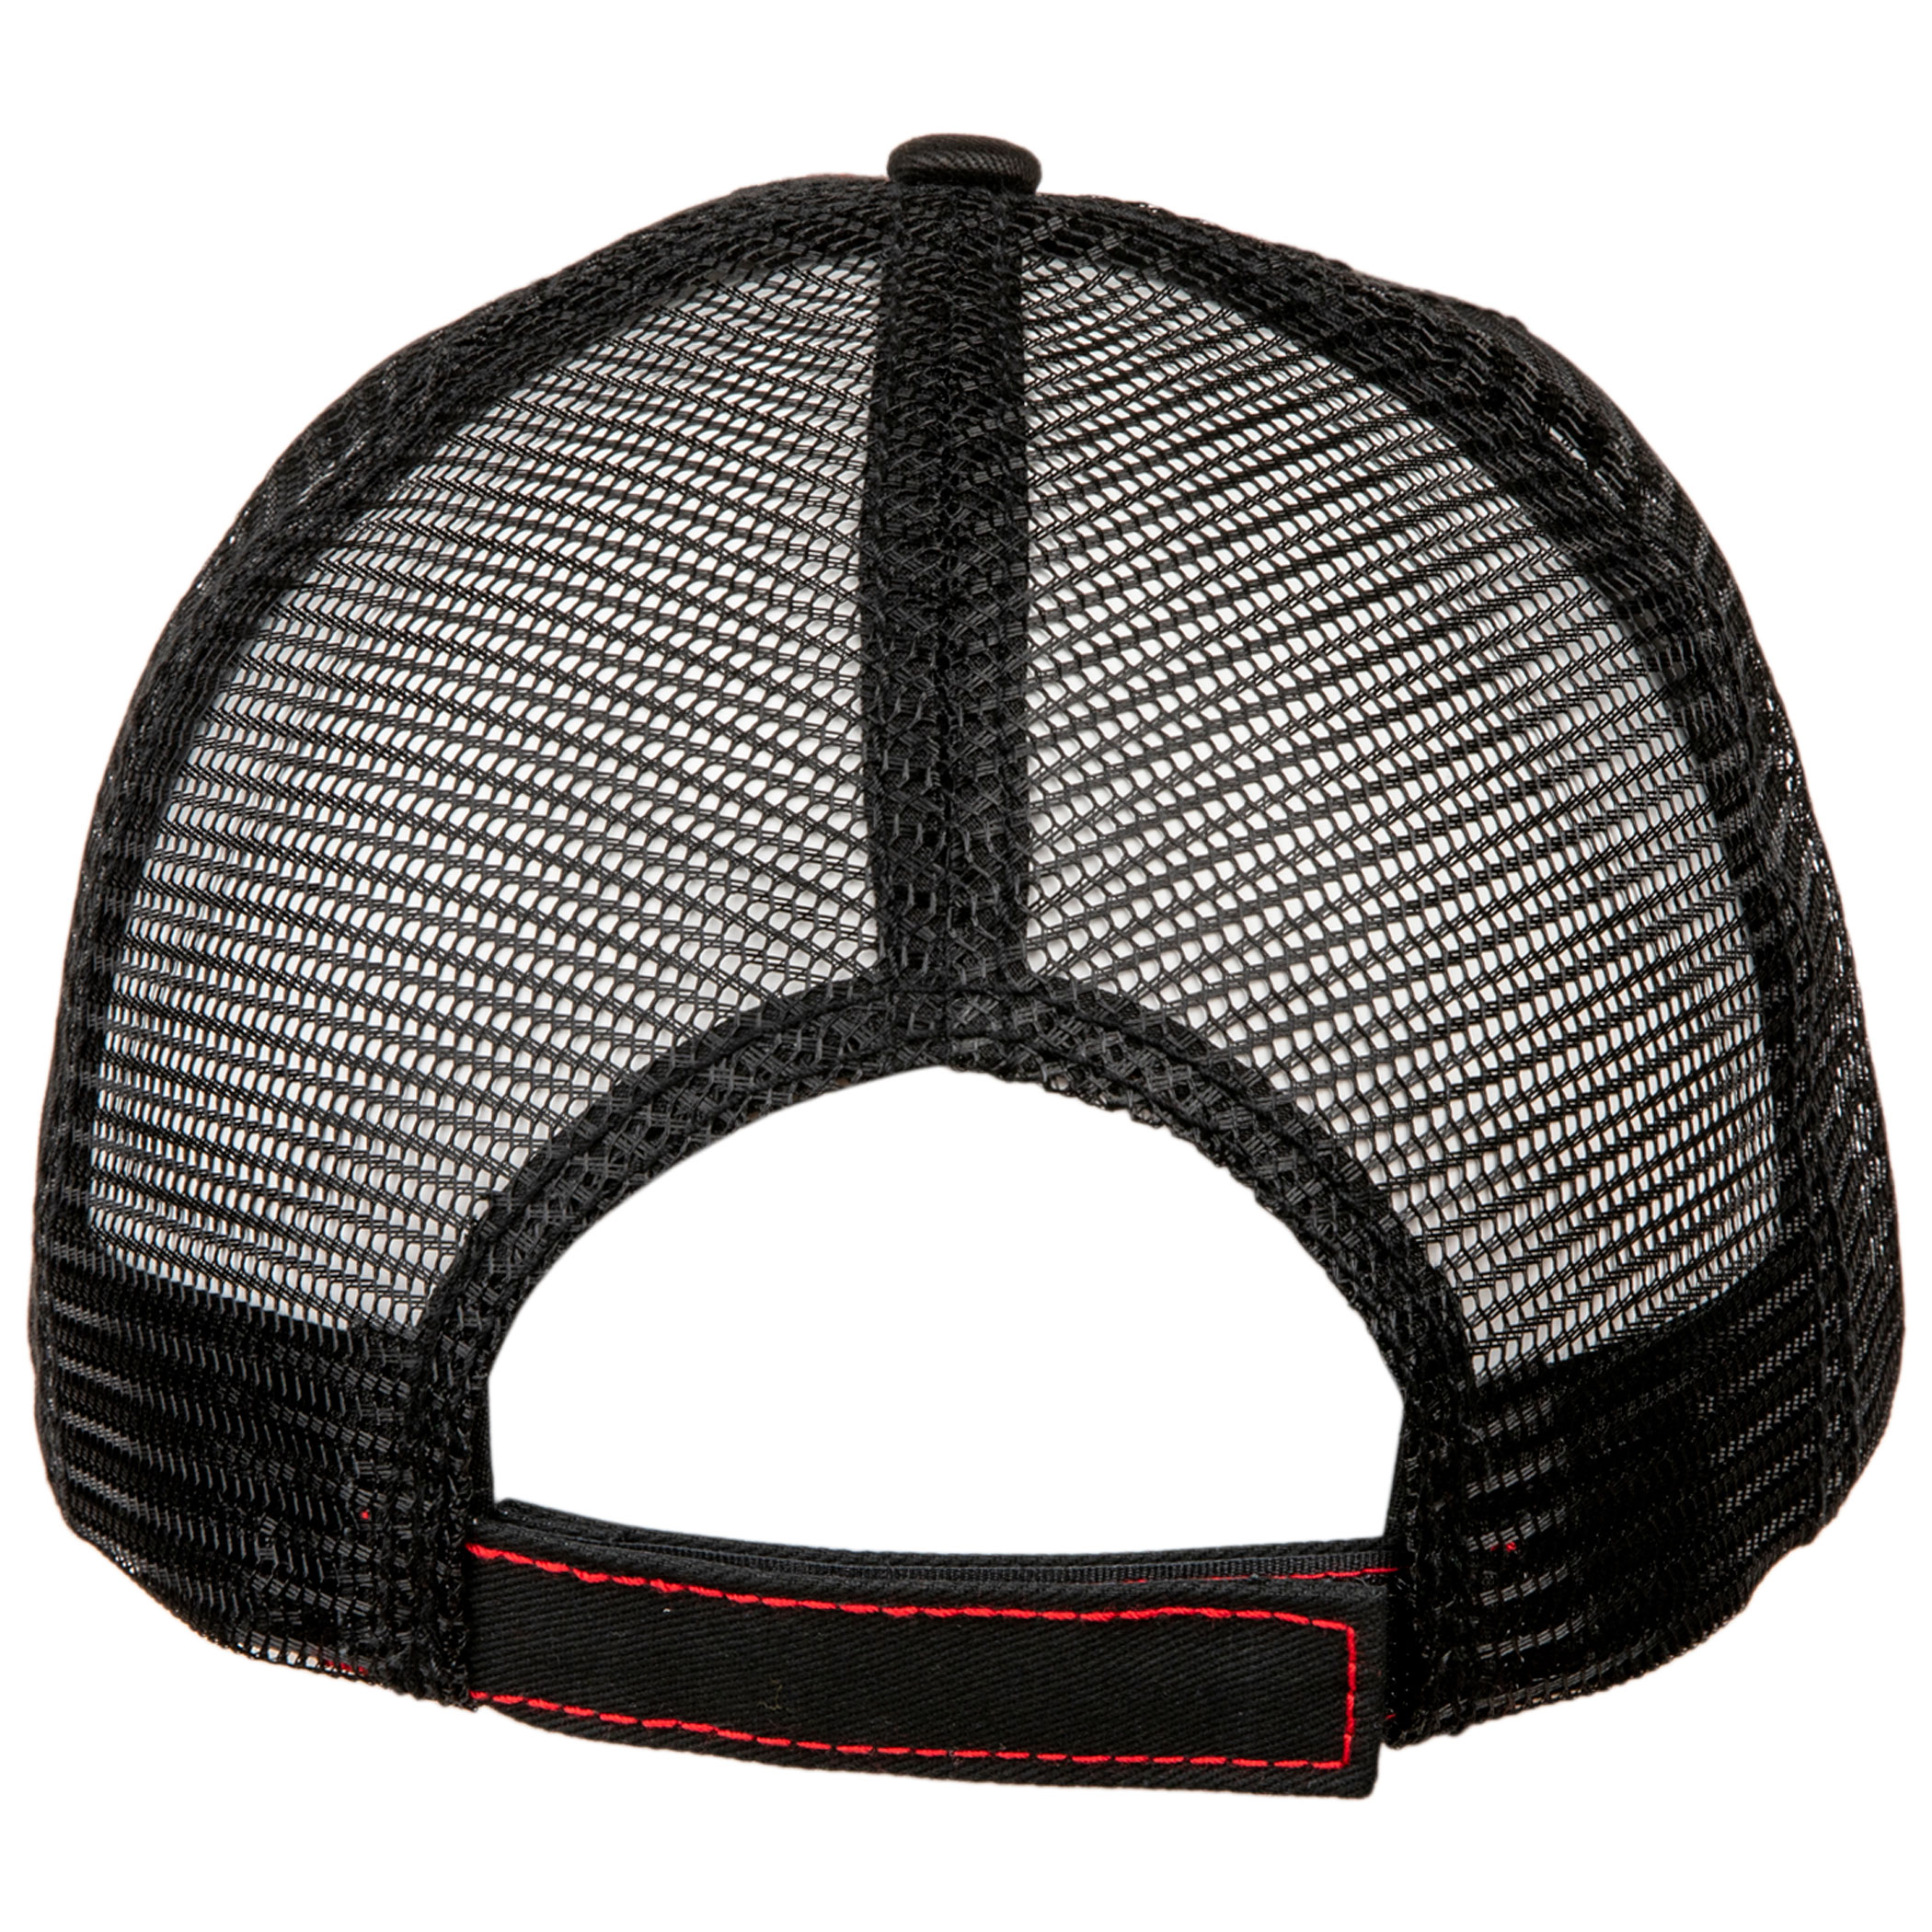 Tecate Trucker Hat Mesh Cap Snapback Adjustable Brand New-Black 